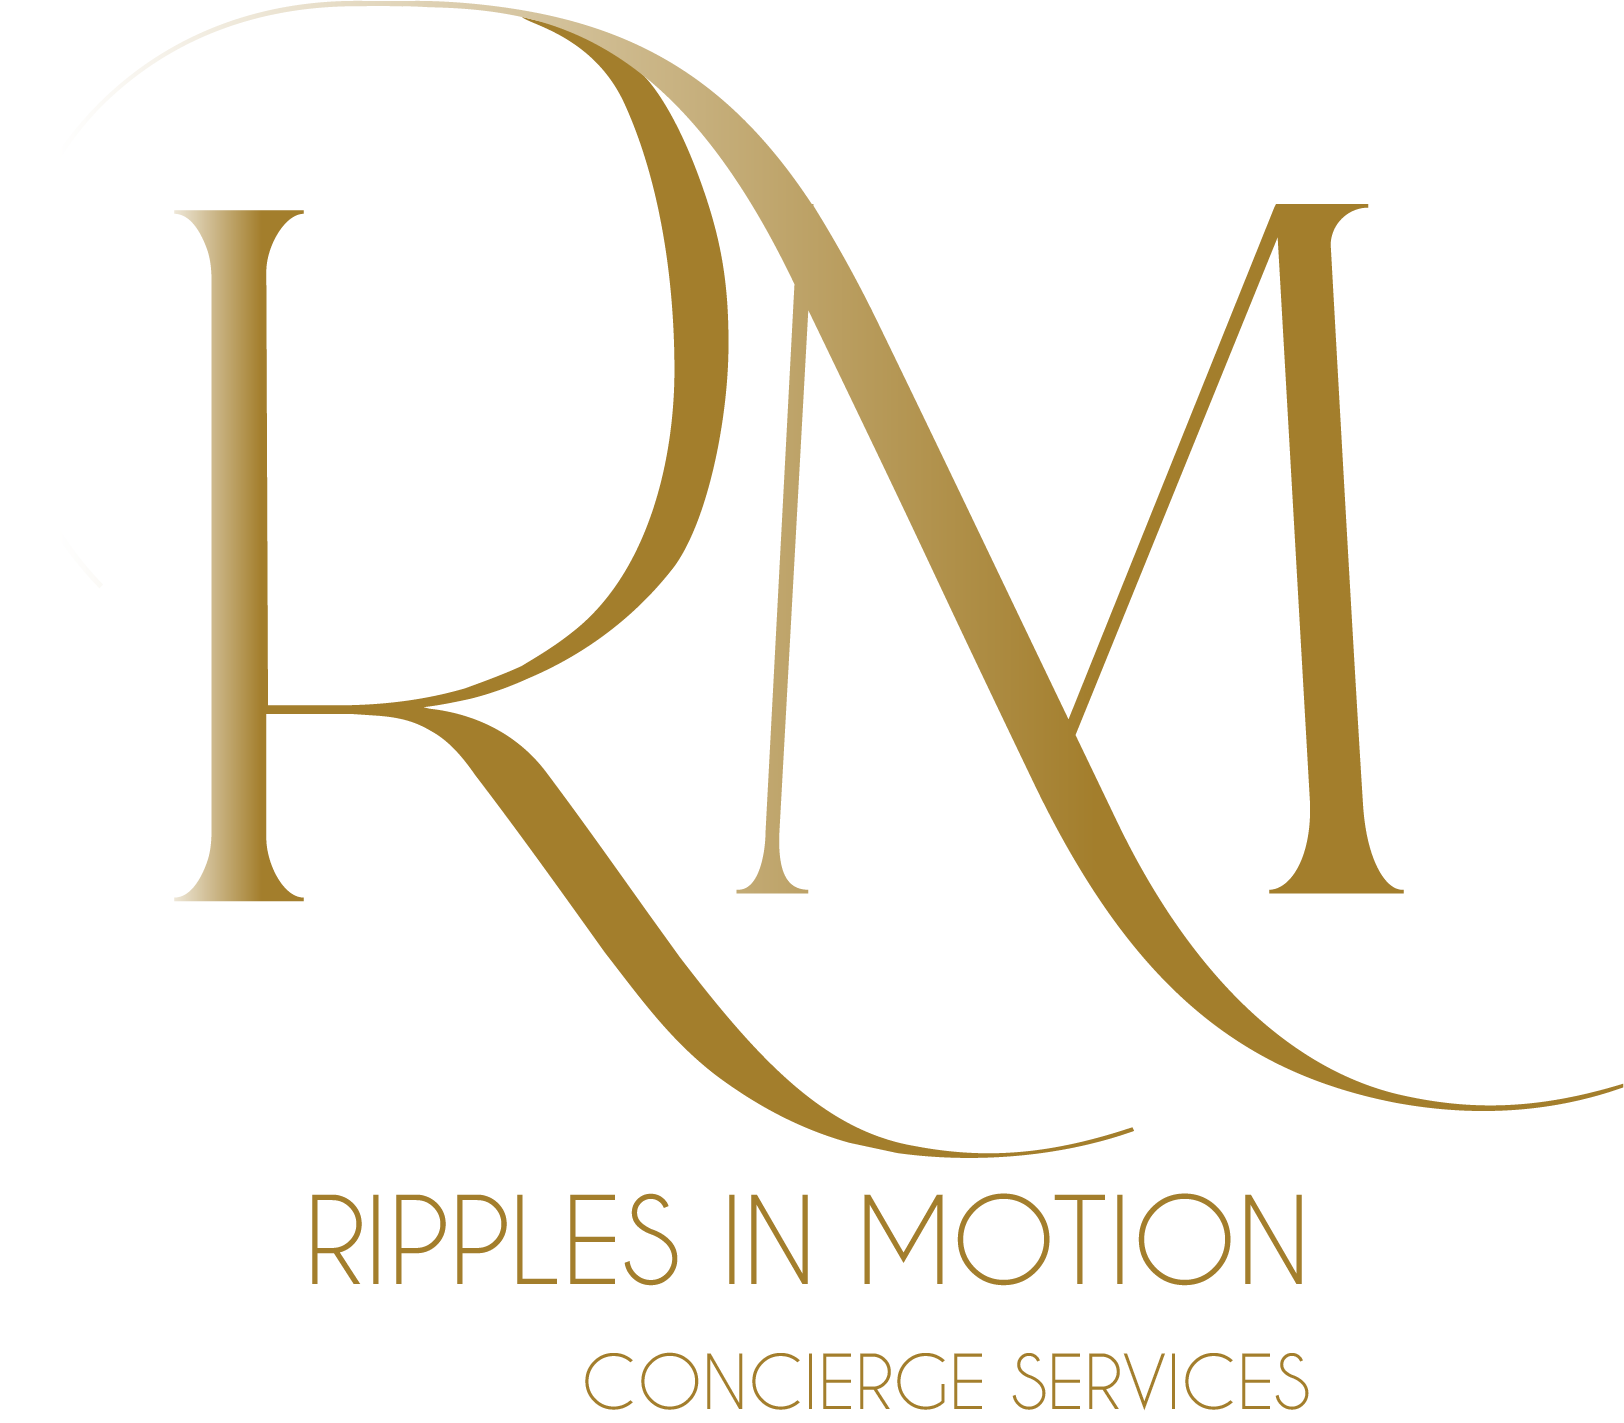 Ripples in Motion logo